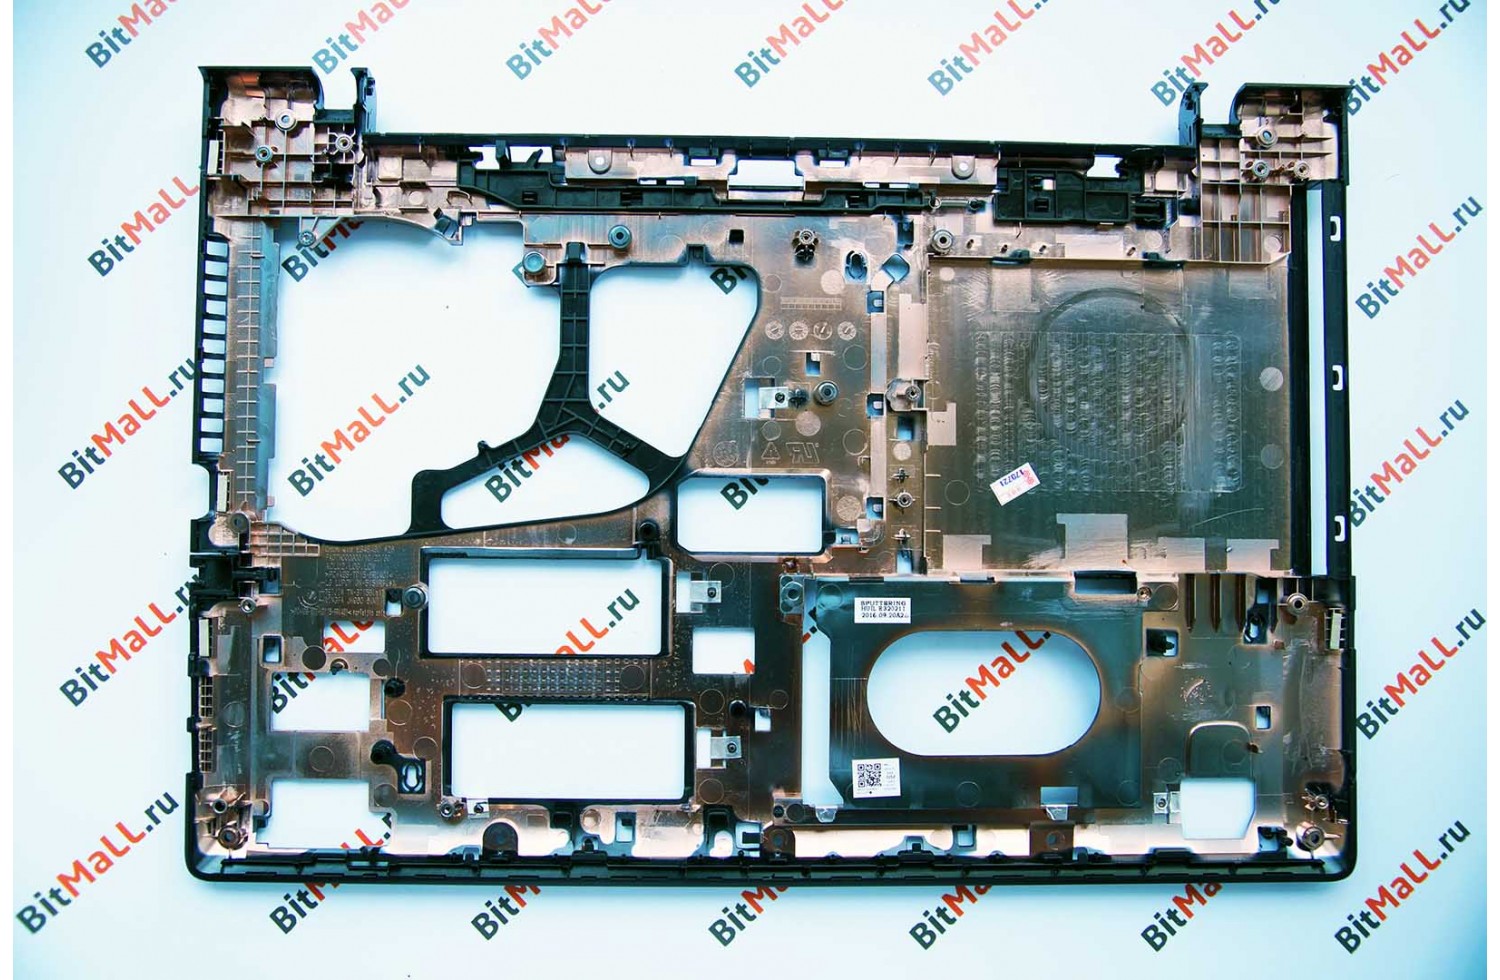 Ноутбук Lenovo Z50 70 Купить